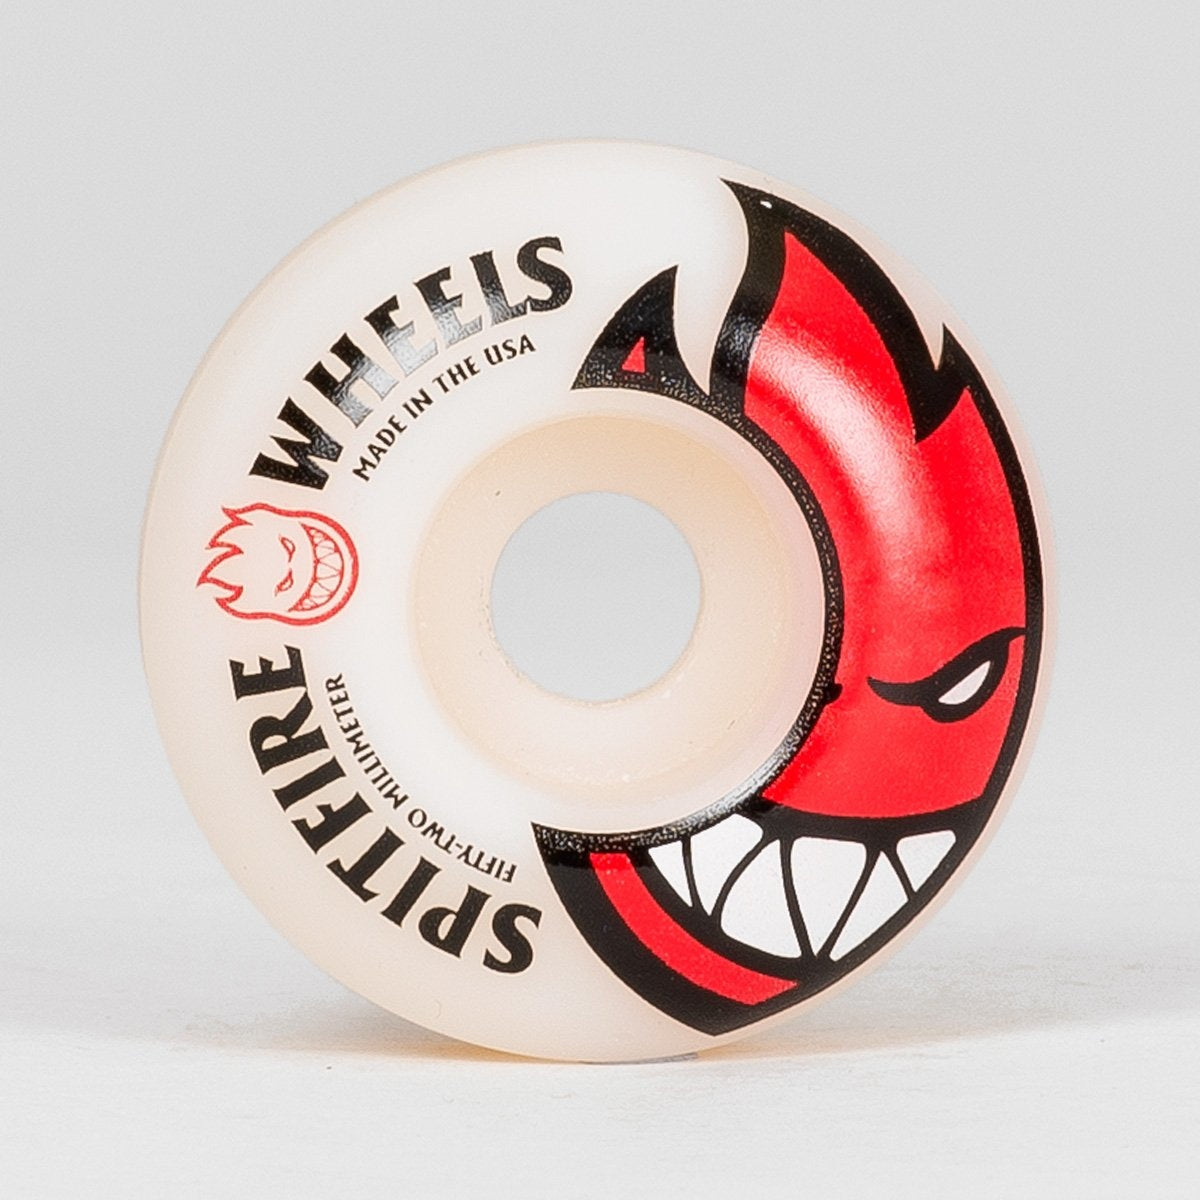 Spitfire Bighead Wheels White/Red 52mm - Skateboard